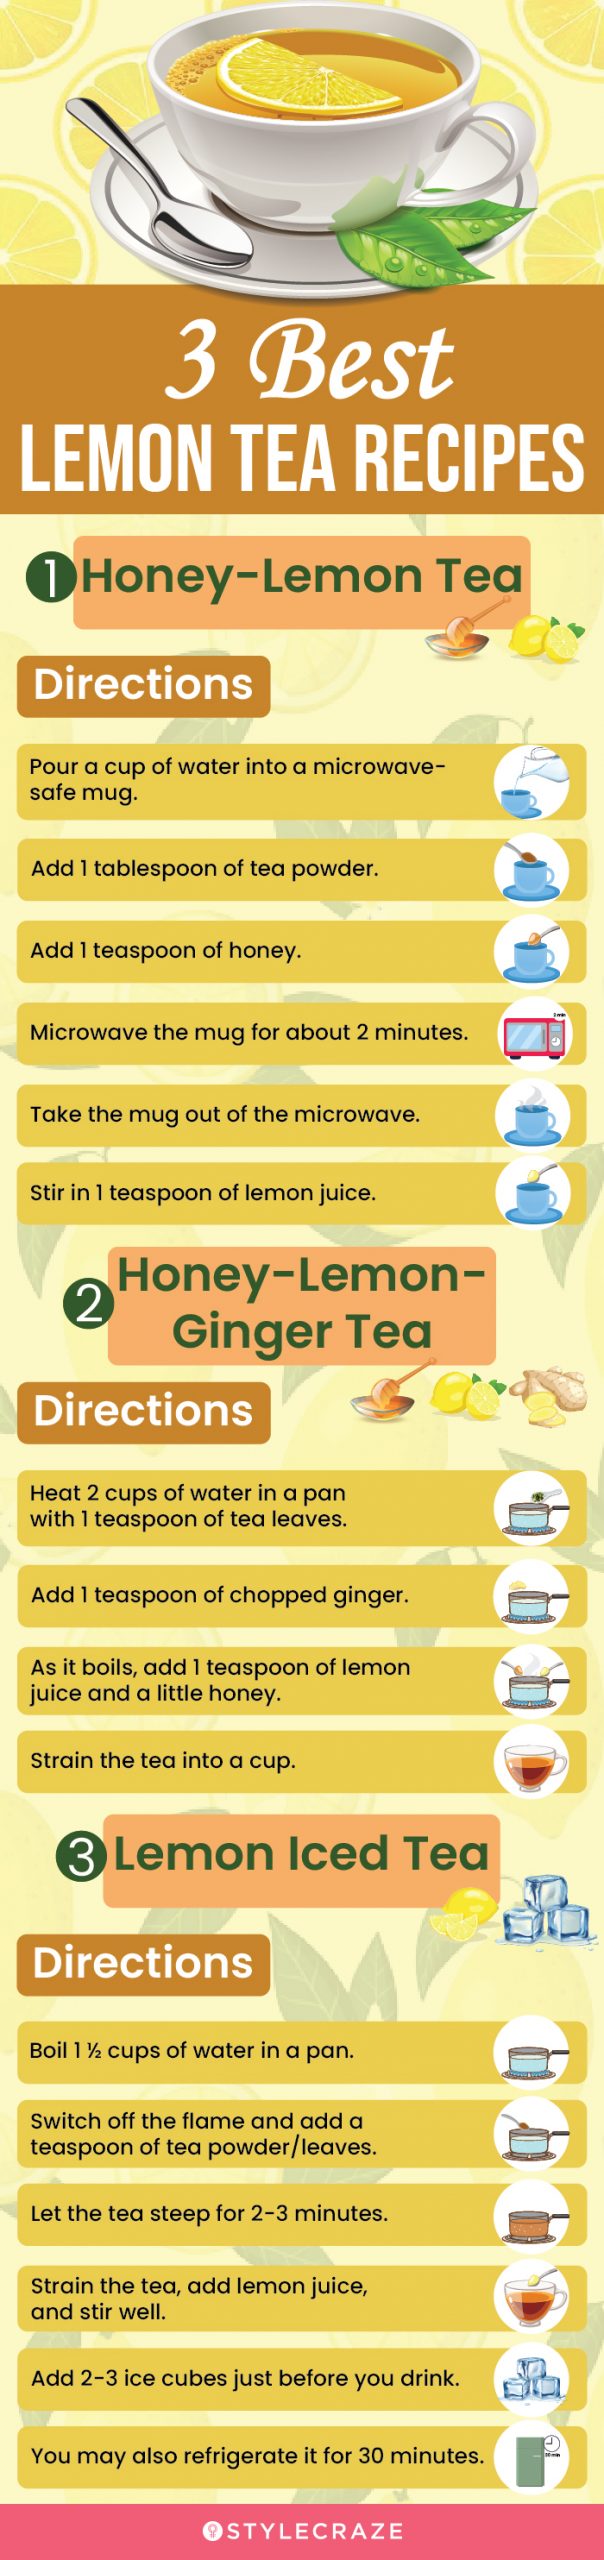 3 best lemon tea recipes [infographic]